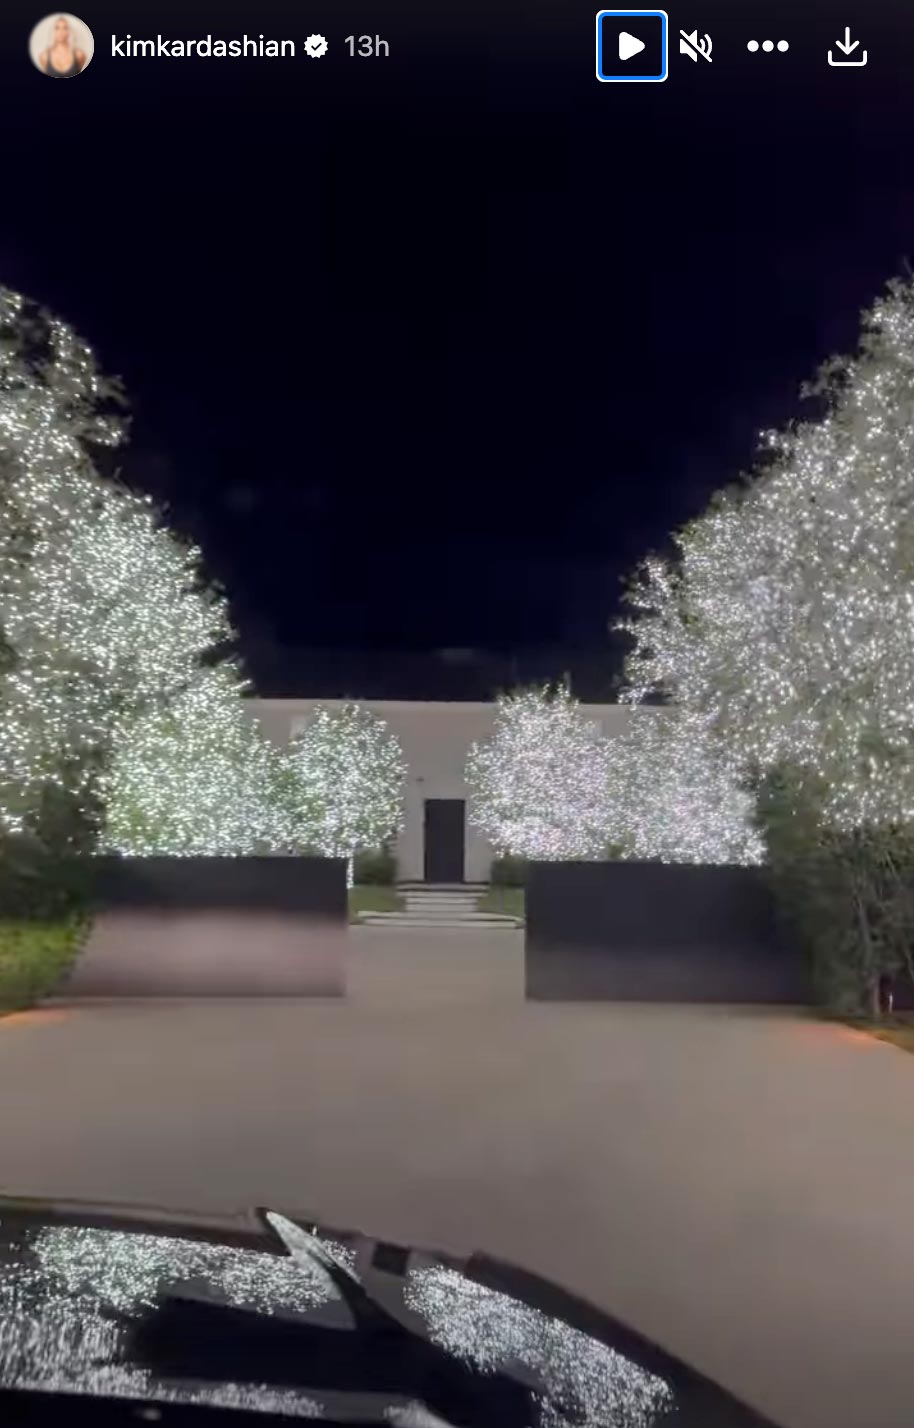 Kim Kardashian Kicks Off Her Christmas Decor With Enormous Light Display Lining Lavish L.A. Driveway